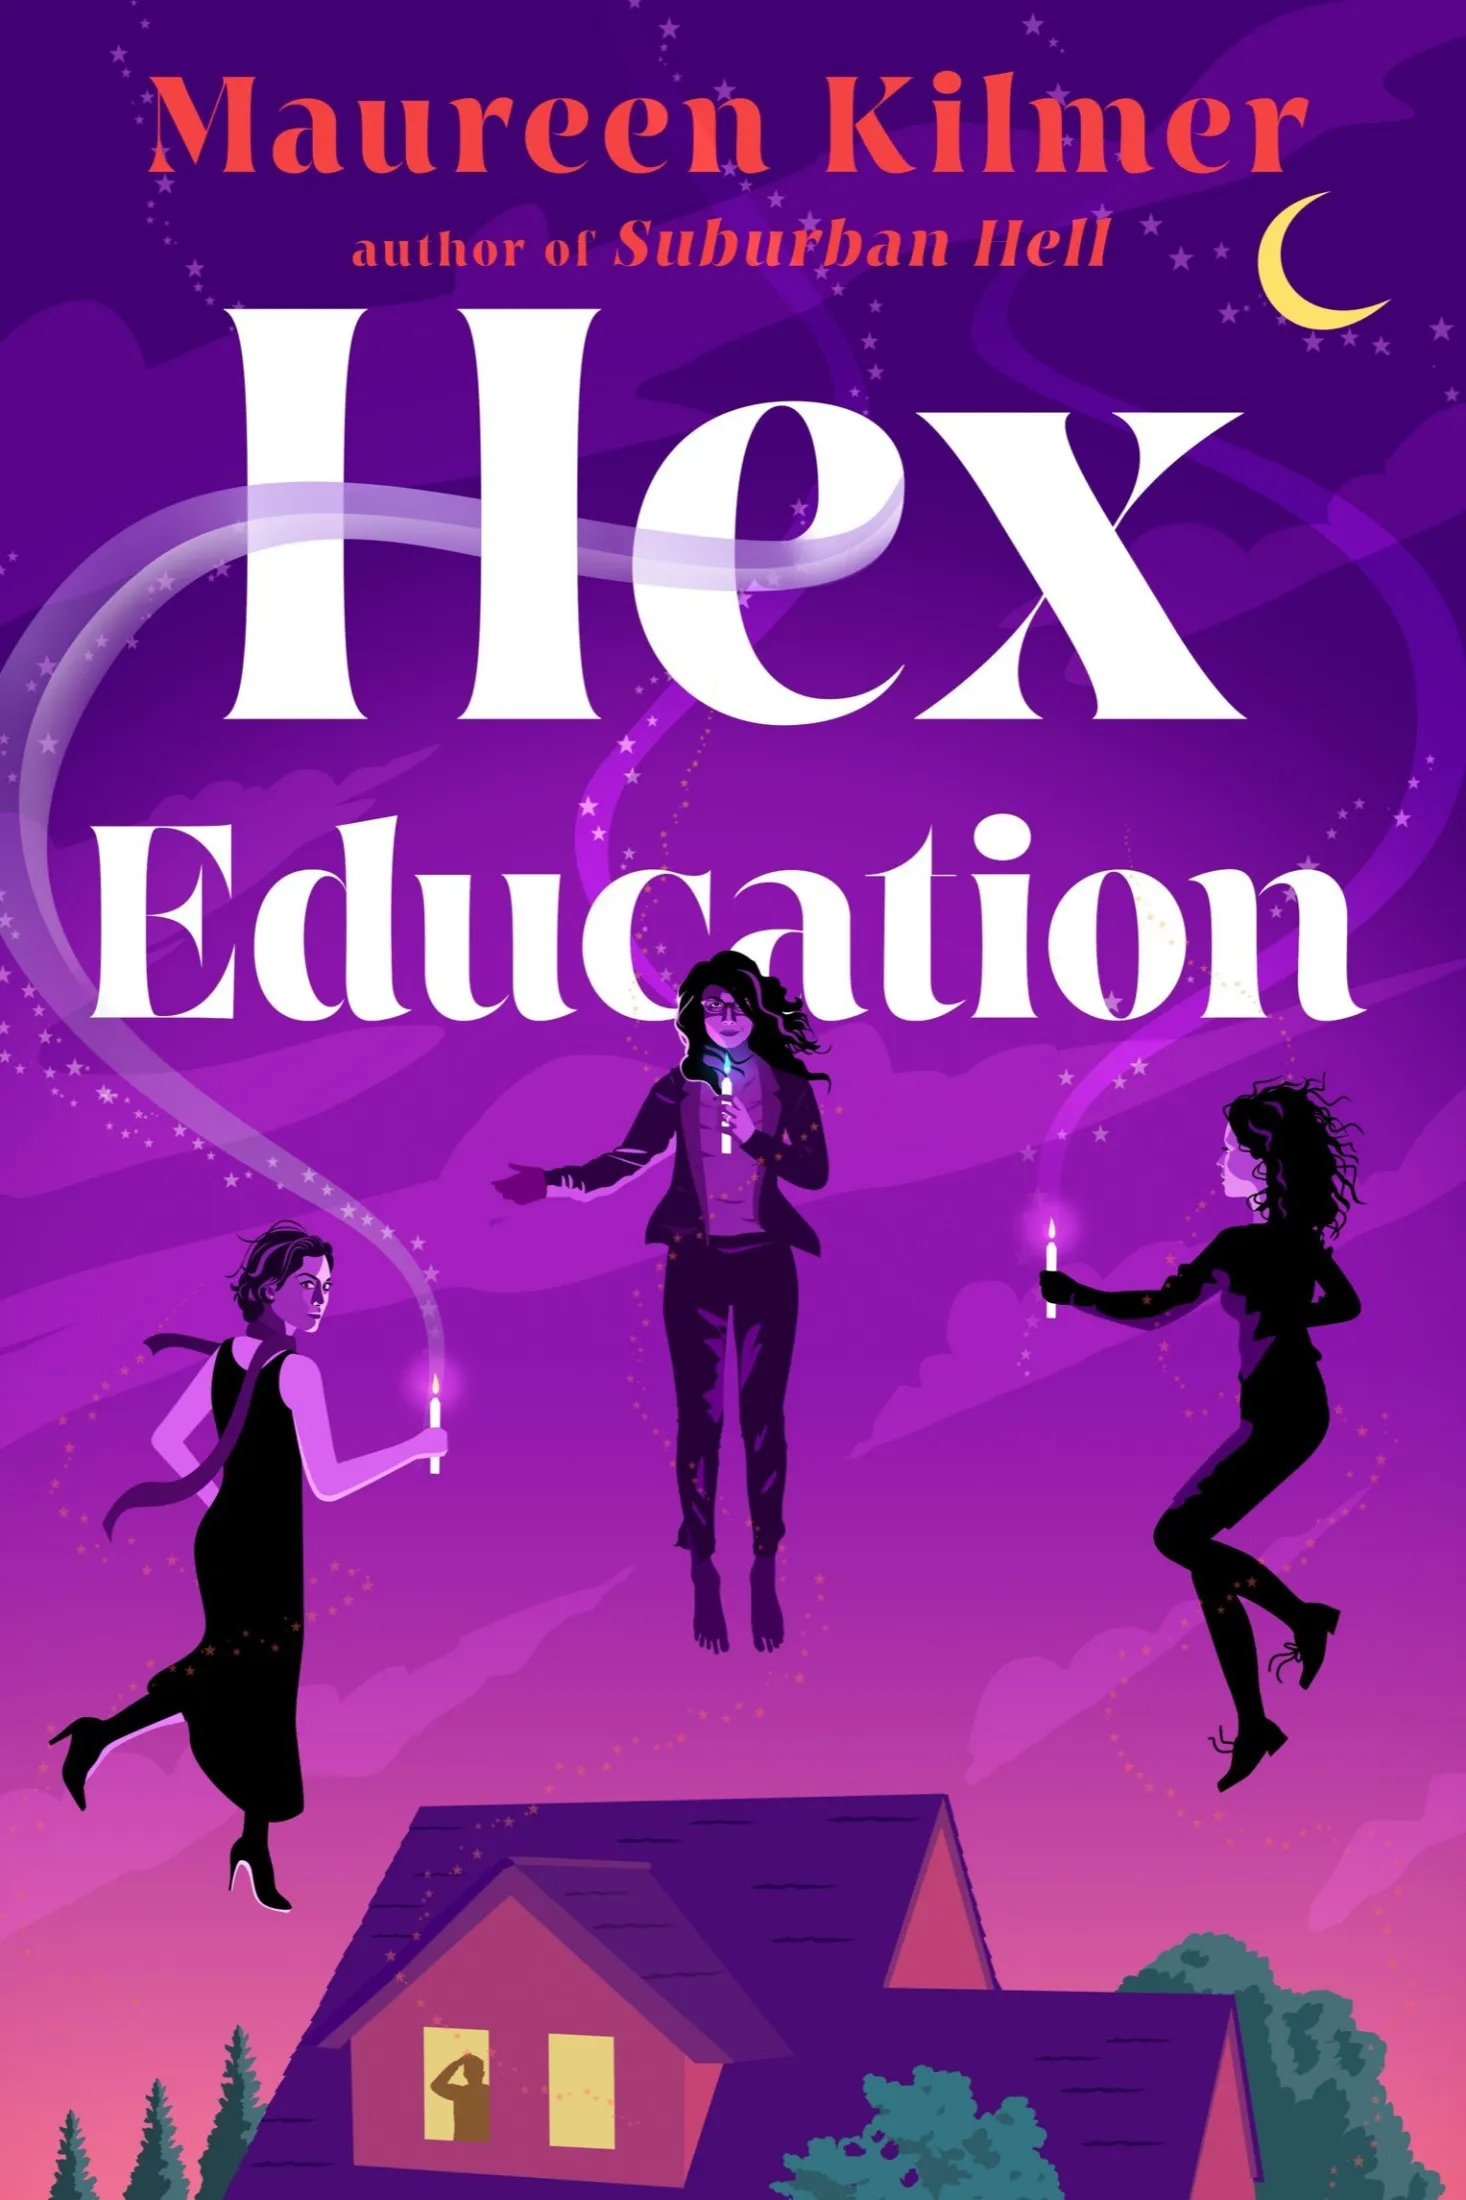 Hex Education